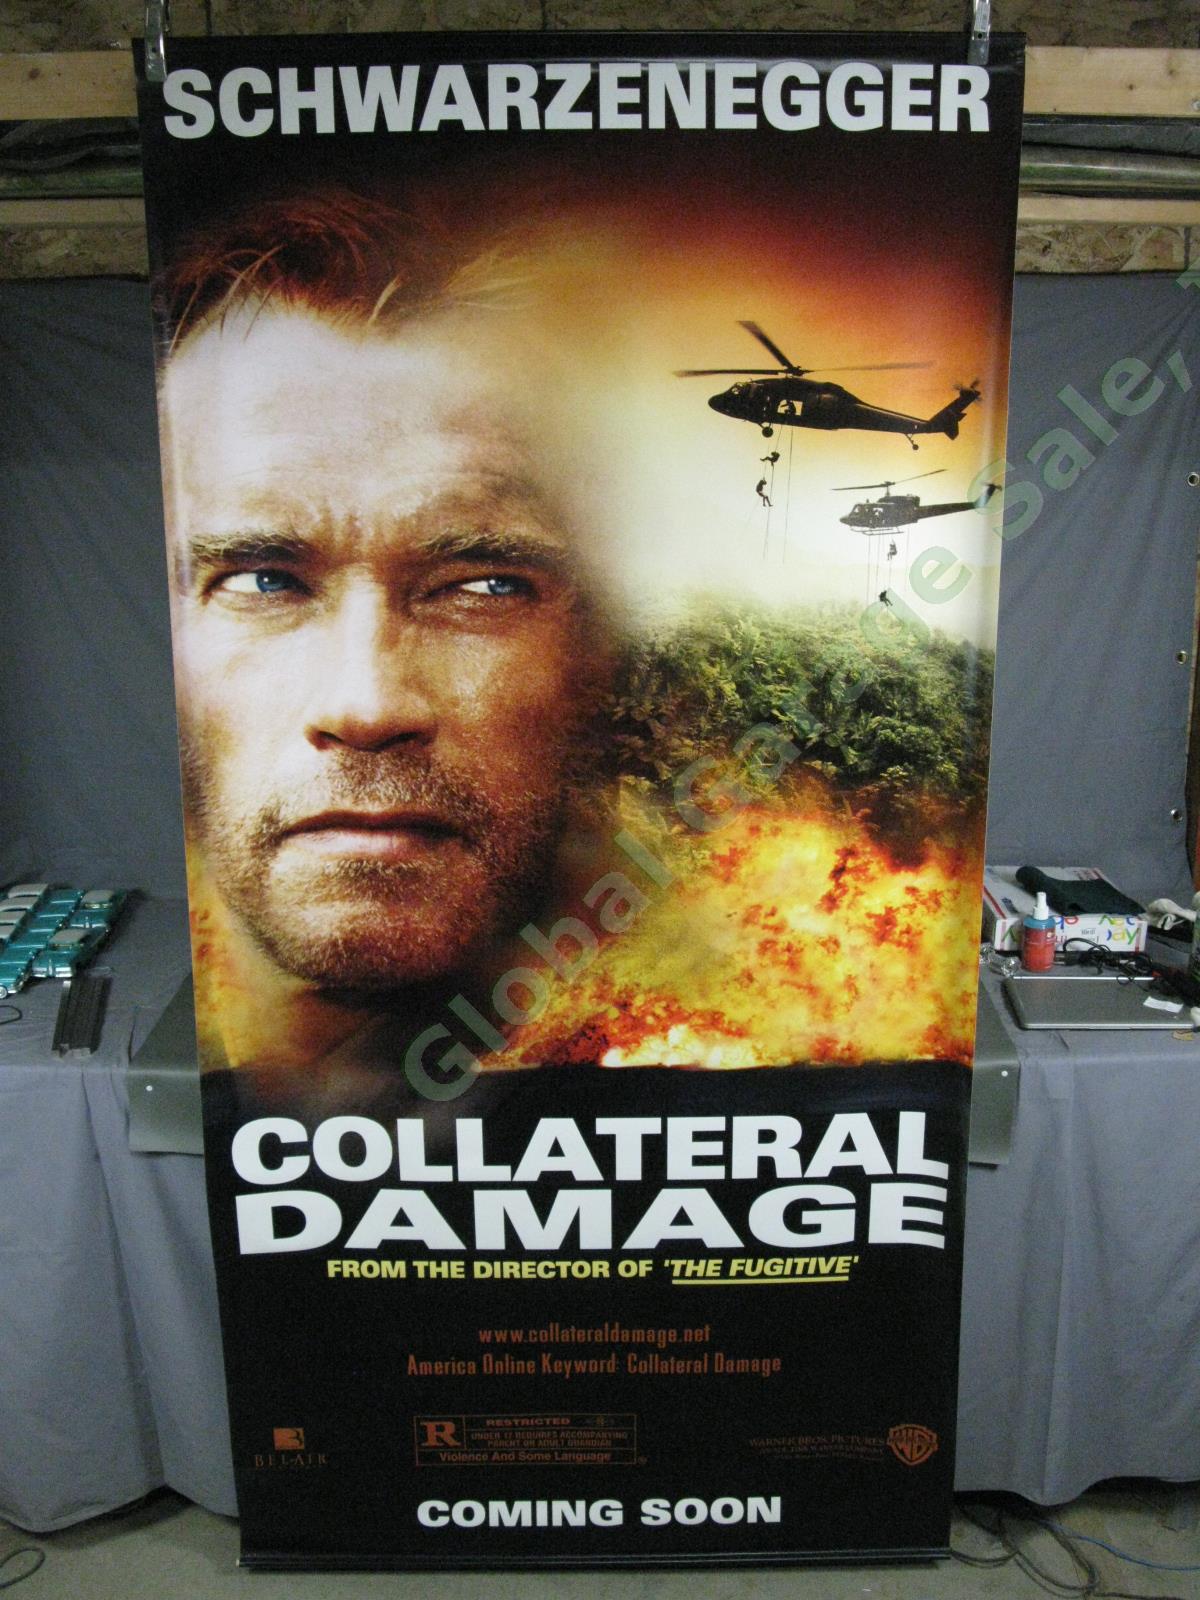 HUGE Collateral Damage Original Movie Theater Lobby Vinyl Banner Schwarzenegger